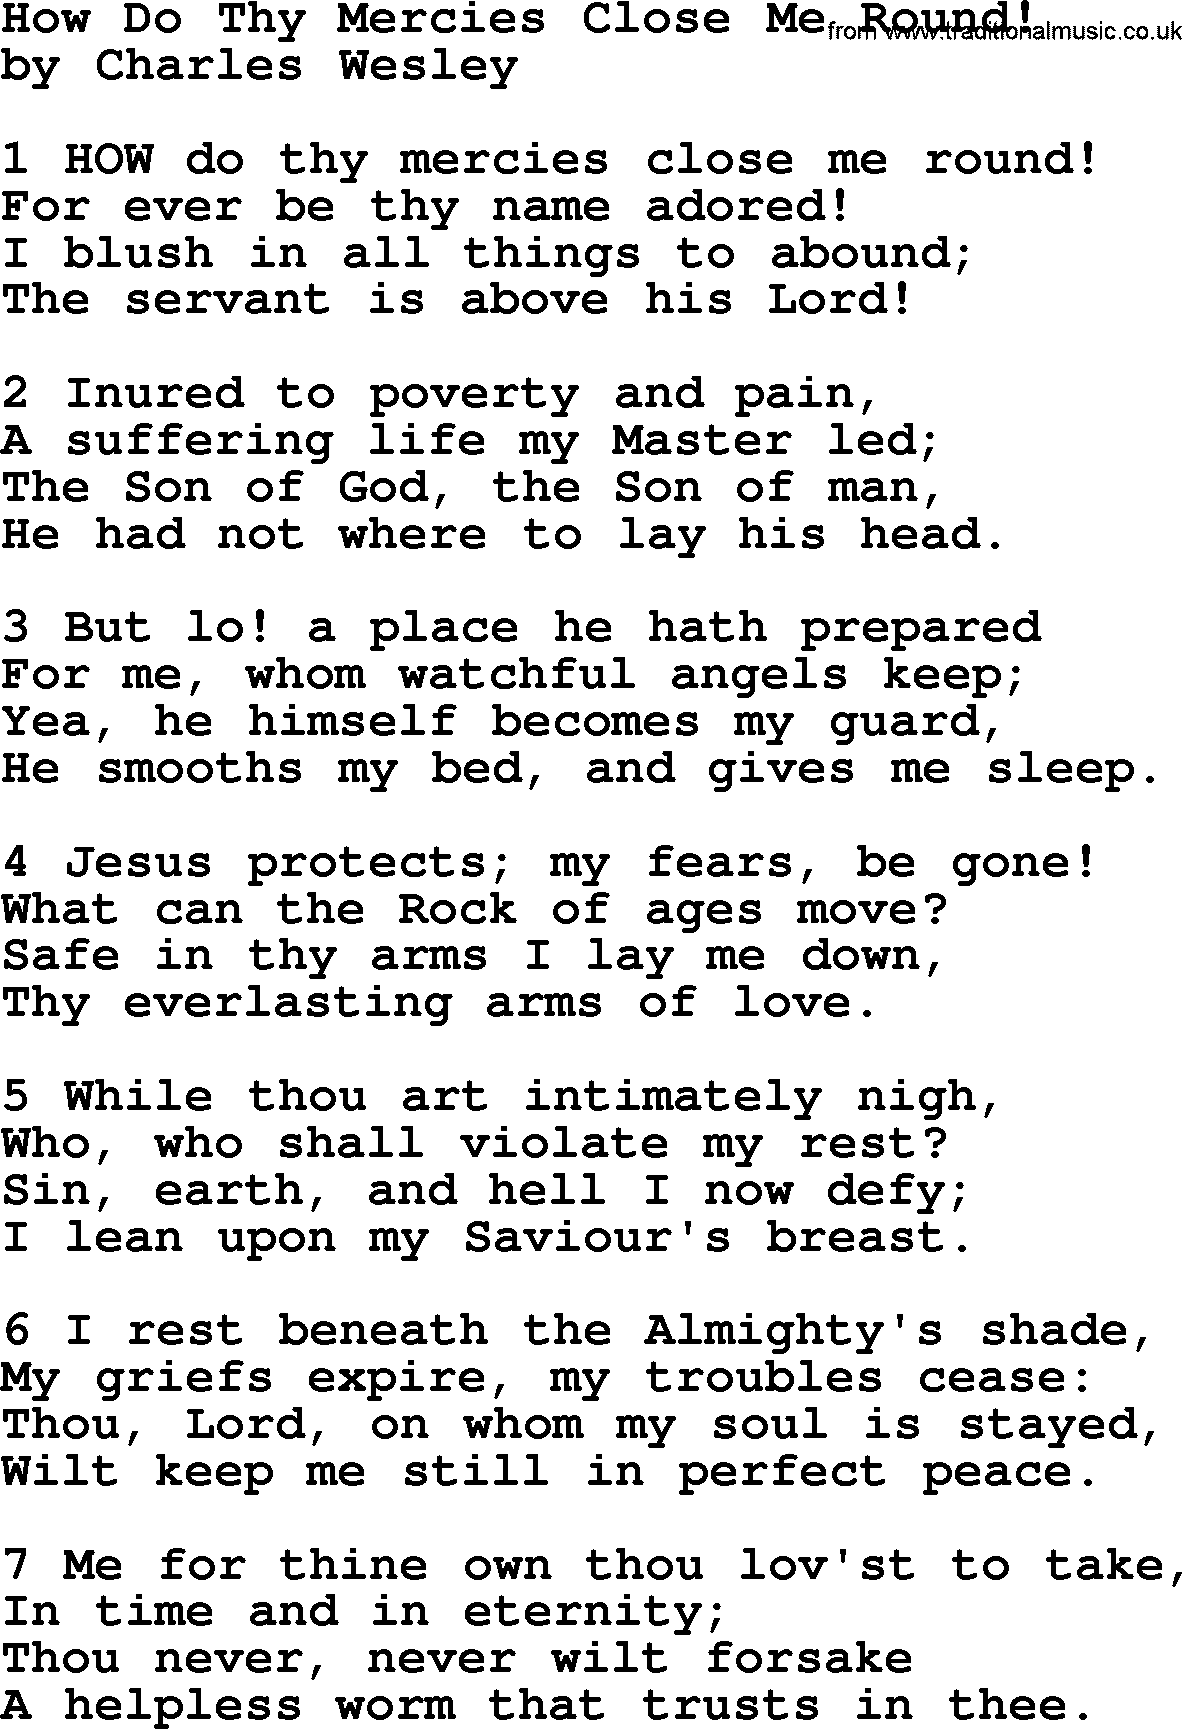 Charles Wesley hymn: How Do Thy Mercies Close Me Round!, lyrics